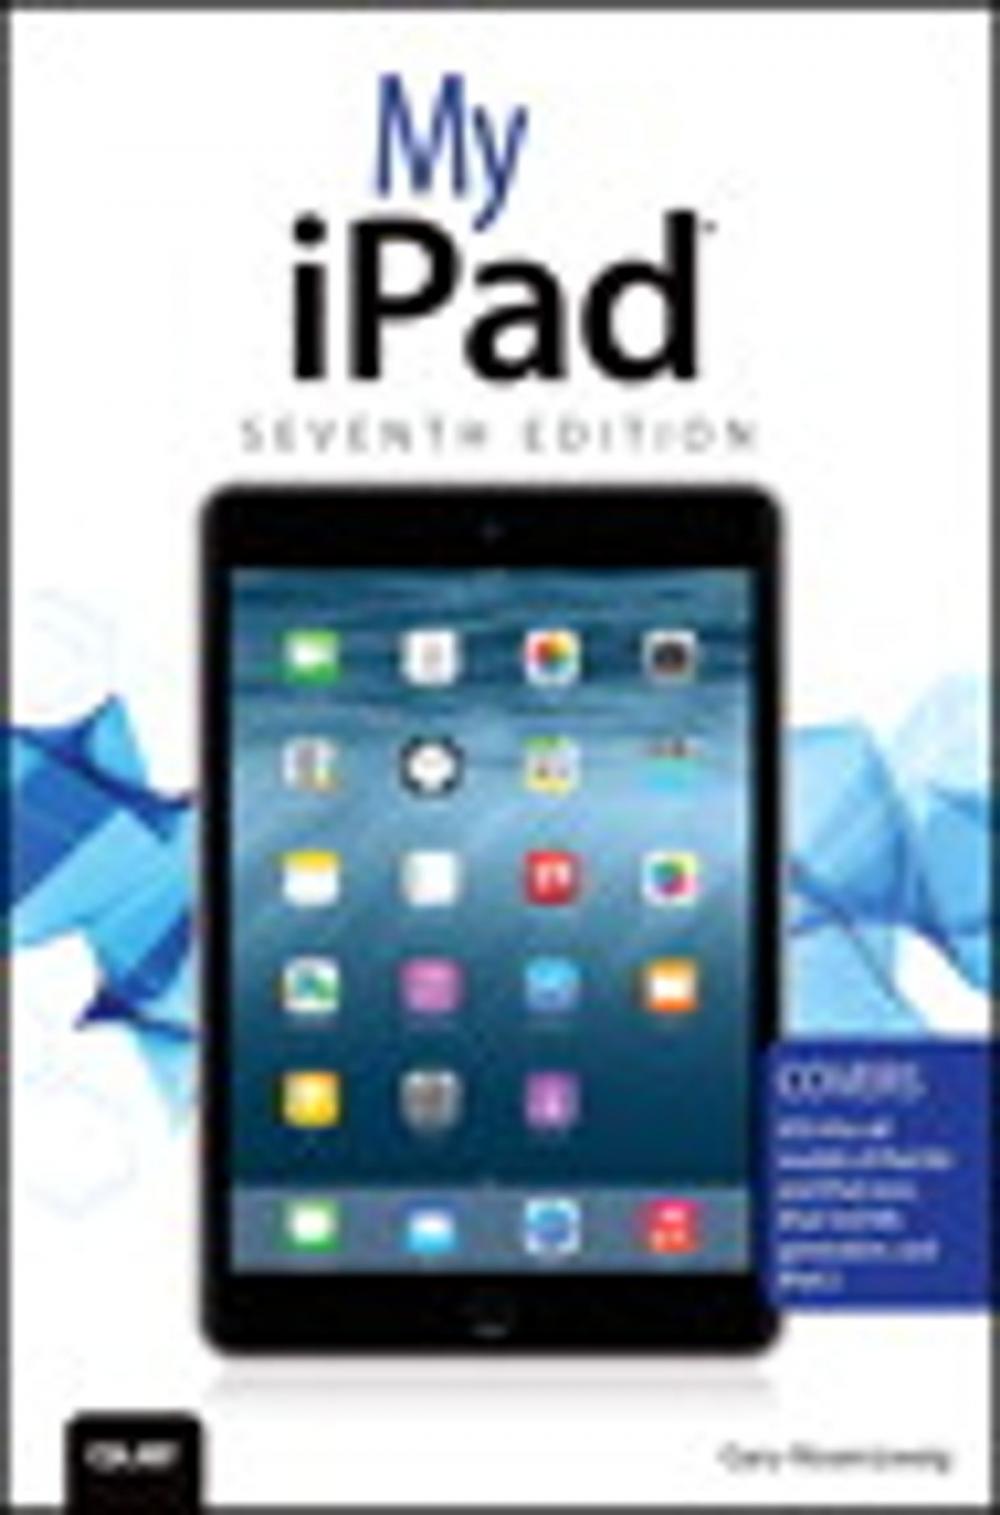 Big bigCover of My iPad (Covers iOS 8 on all models of iPad Air, iPad mini, iPad 3rd/4th generation, and iPad 2)